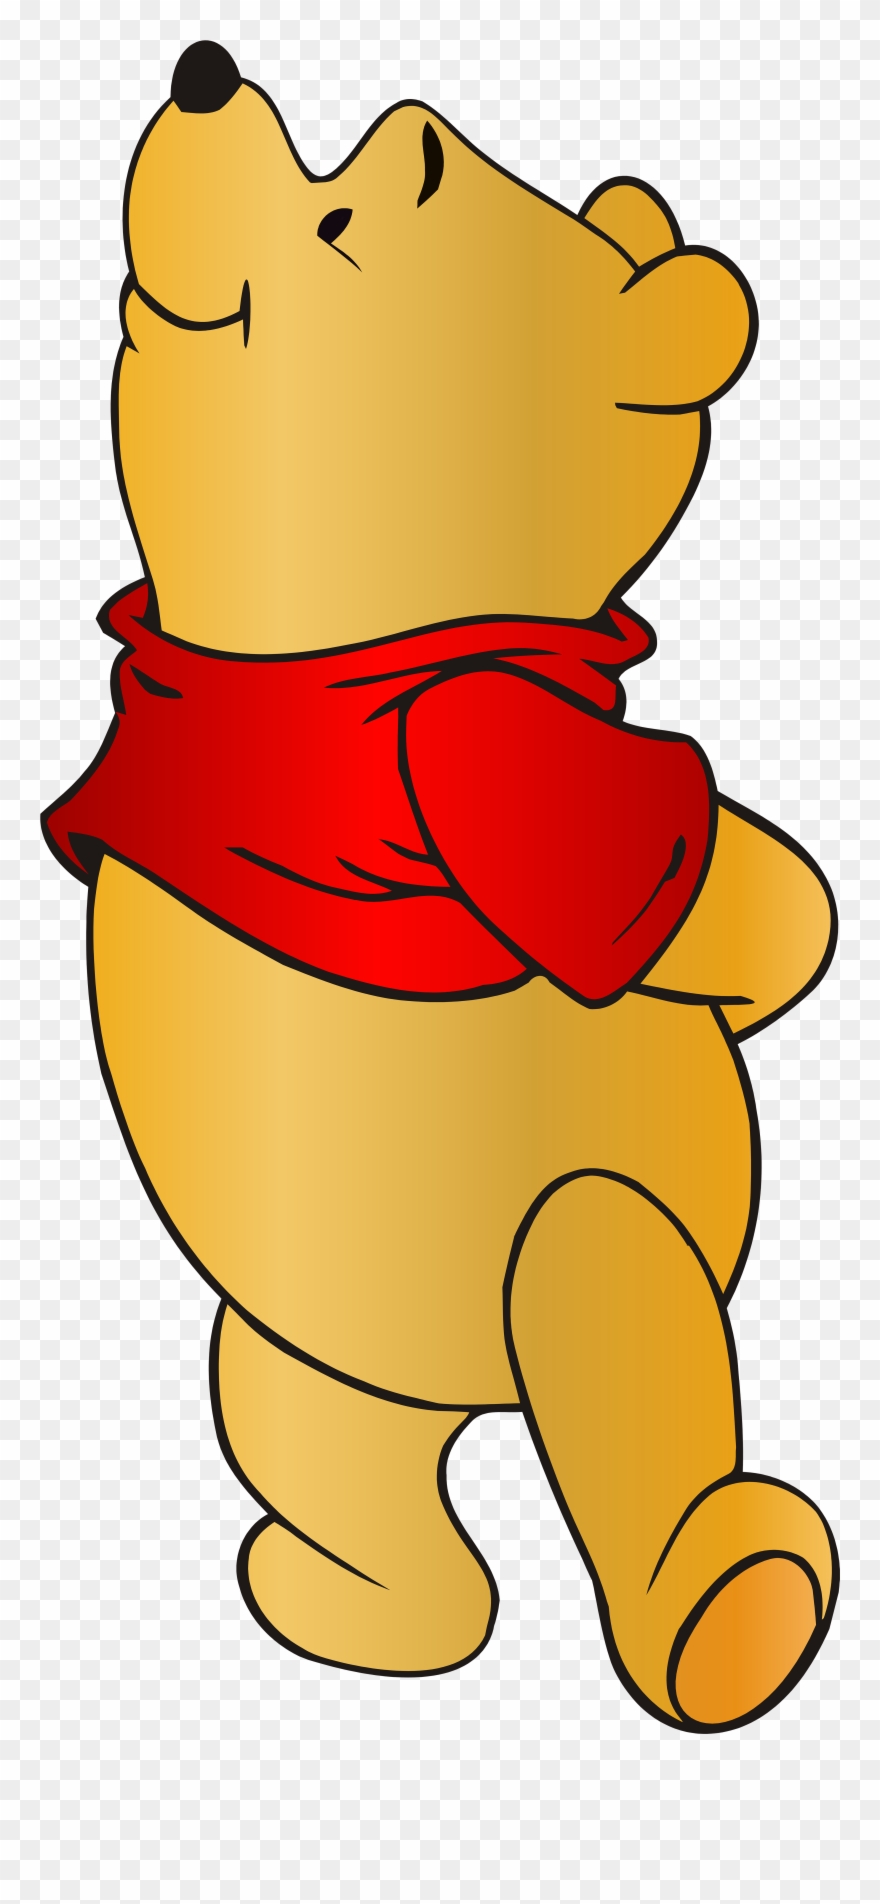 Winnie the pooh.